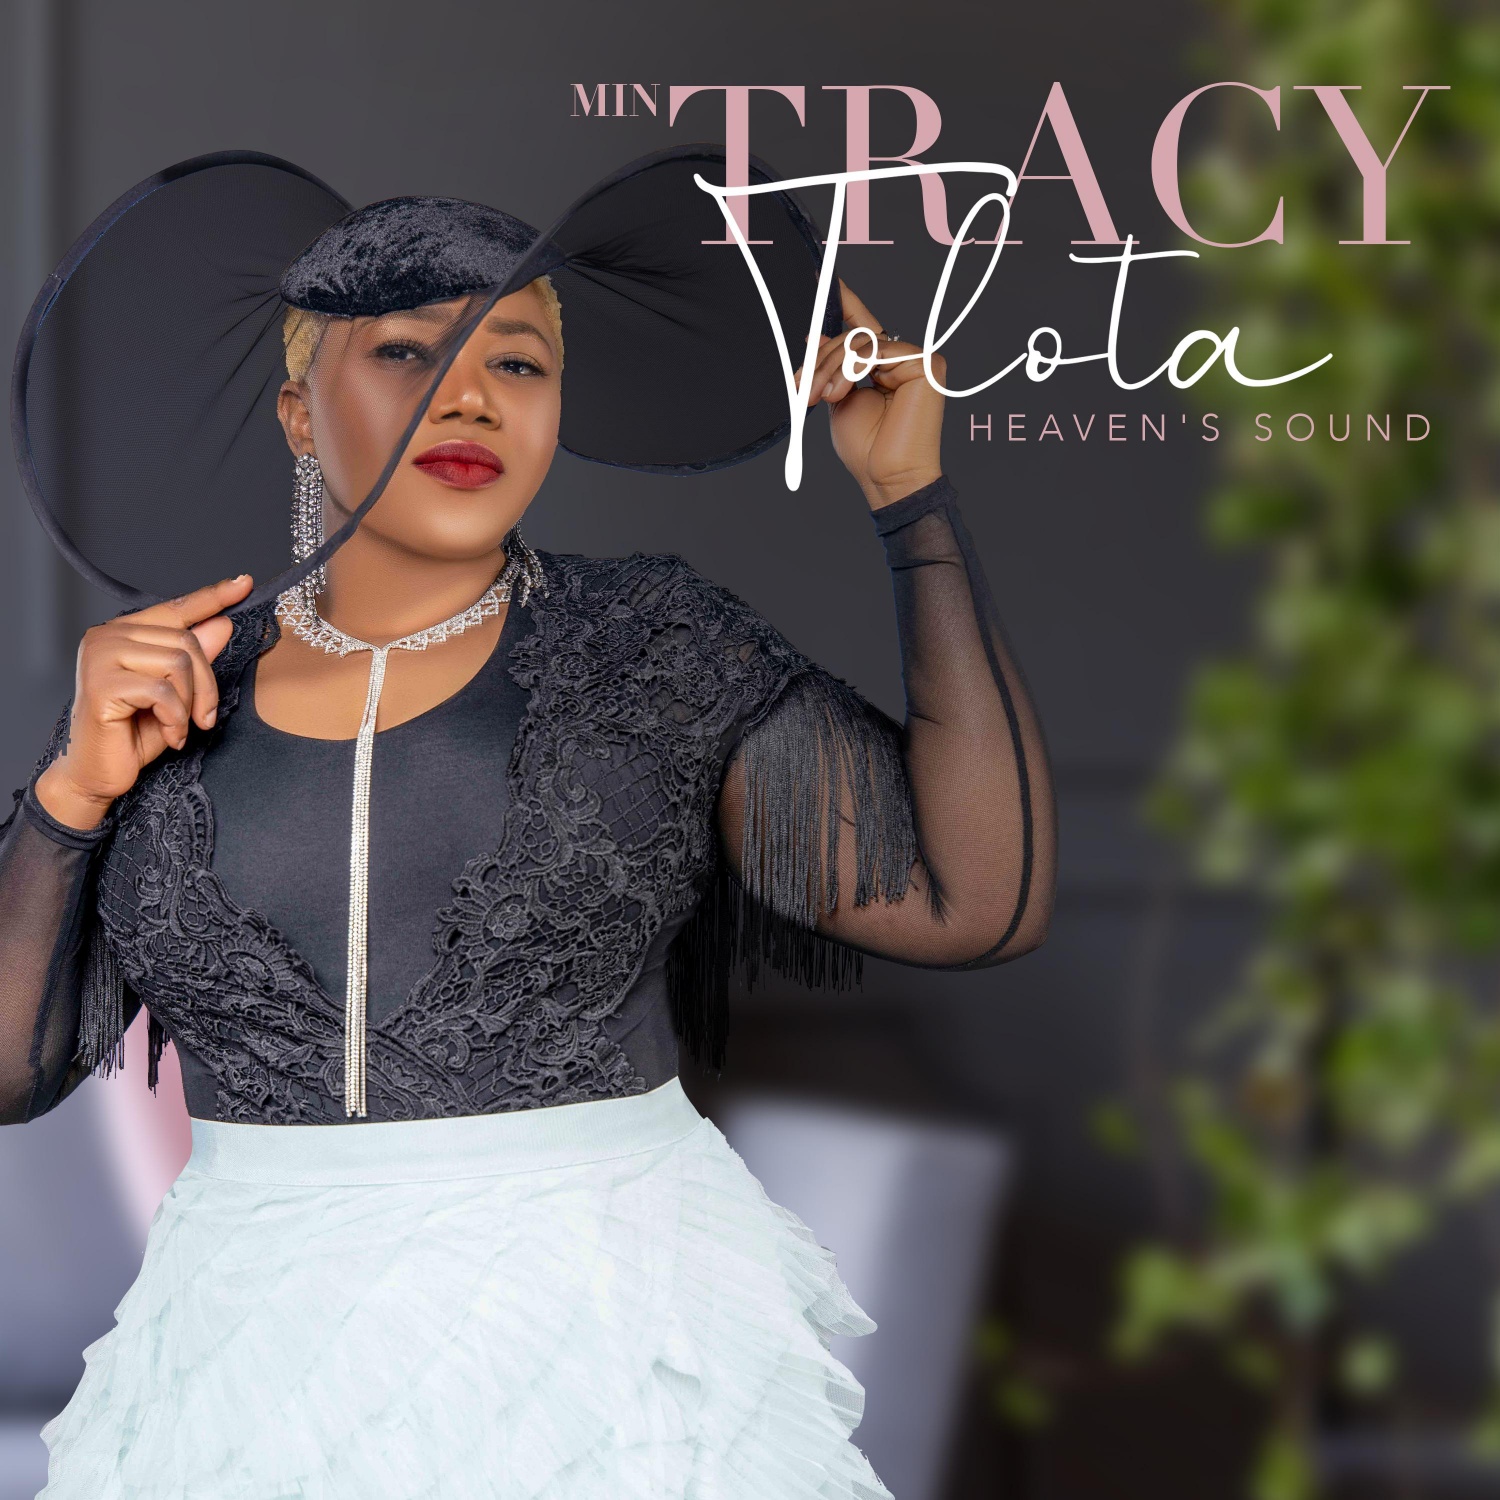 [Album] Heaven's Sound - Minister Tracy Tolota